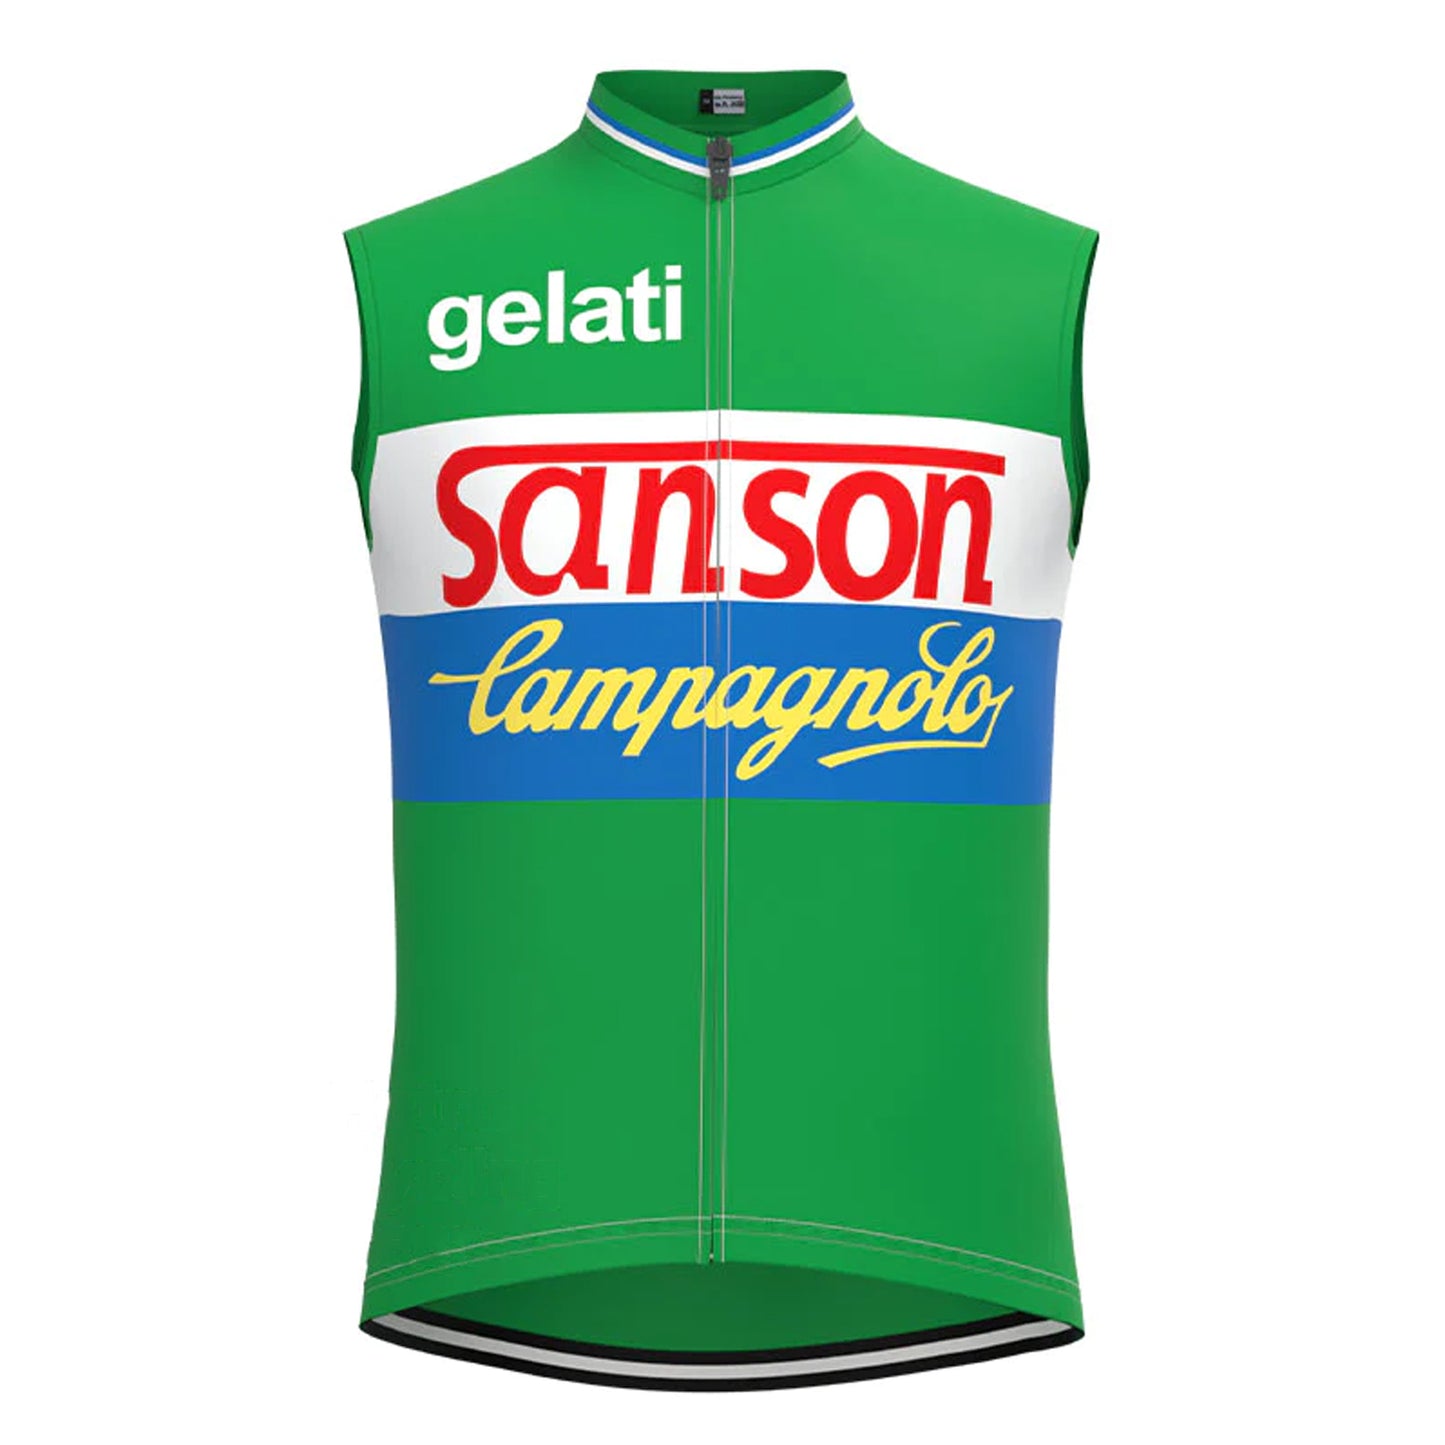 Gis Gelati Sanson Green Retro MTB Cycling Vest